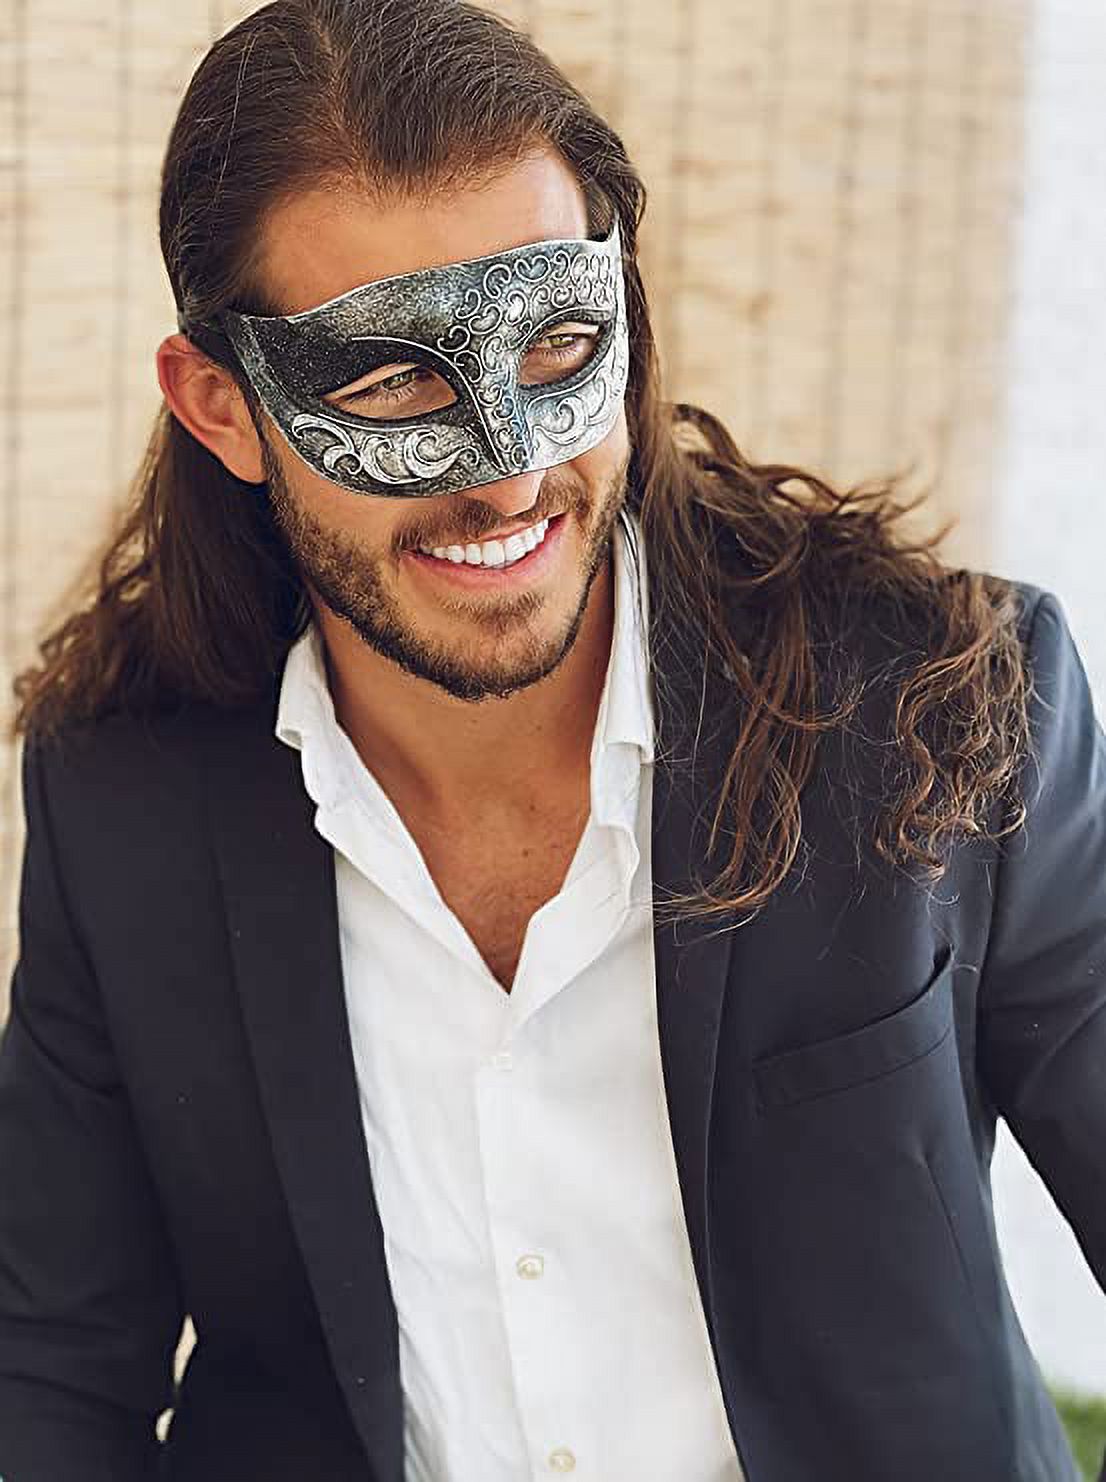 Luxury Mask – Antique Look Venetian Party Mask for Men & Women